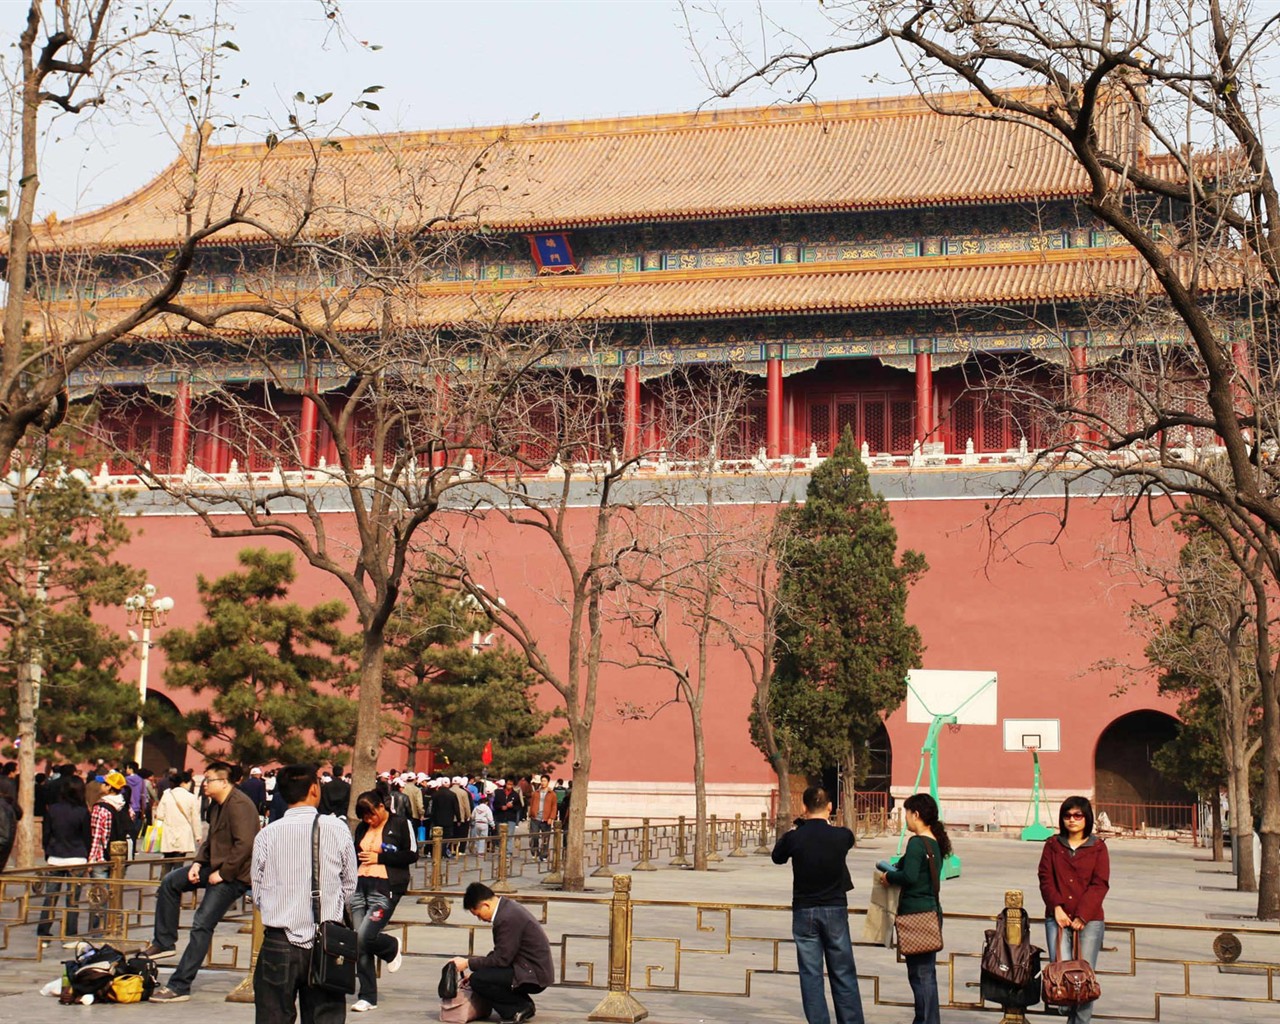 Tour Beijing - Tiananmen Square (ggc works) #2 - 1280x1024